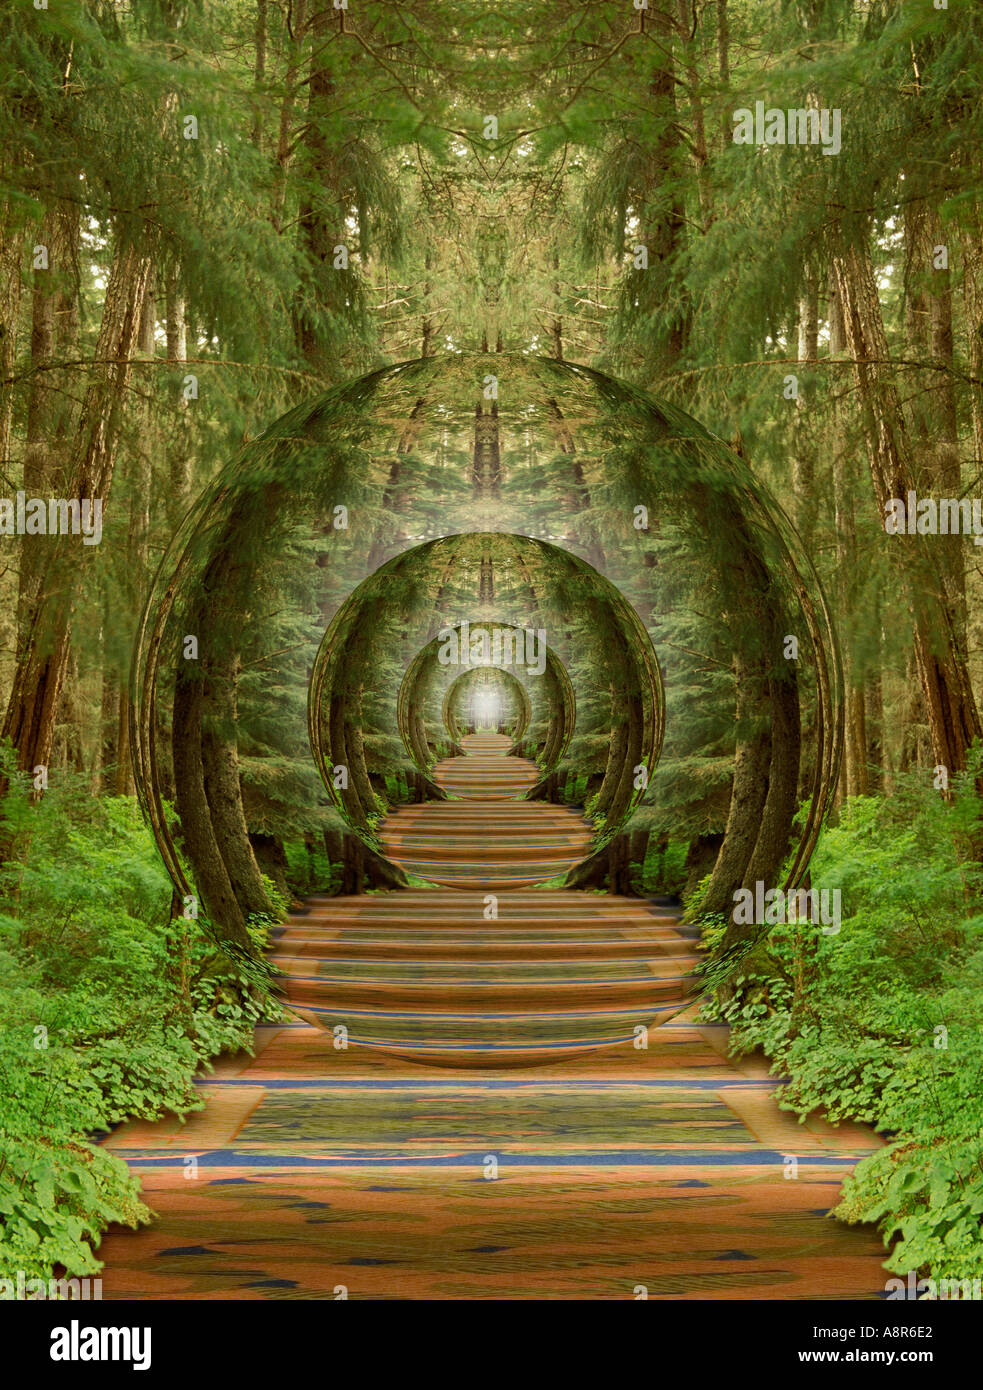 Lange Wald Flur abstrakt Stockfotografie - Alamy